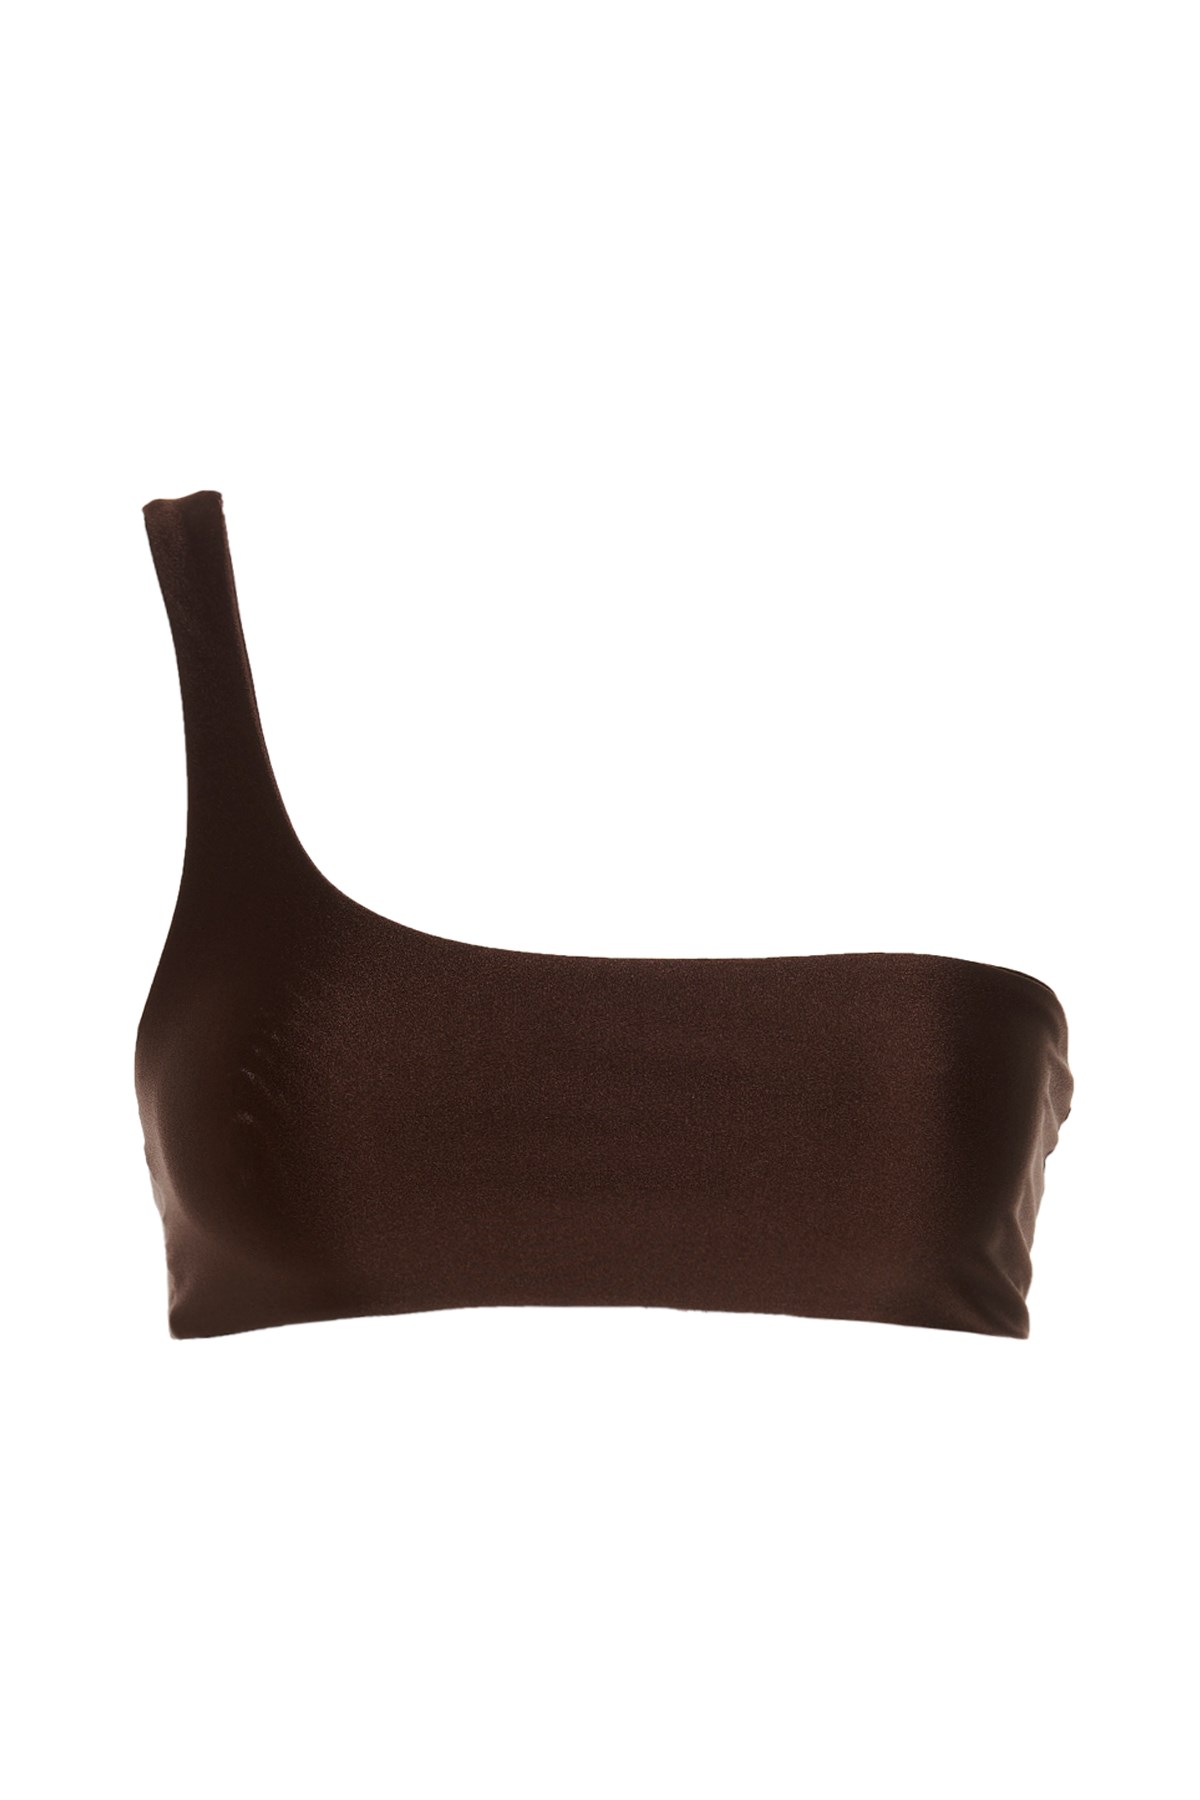 JADE SWIM 'Apex One Shoulder’ Bikini Top